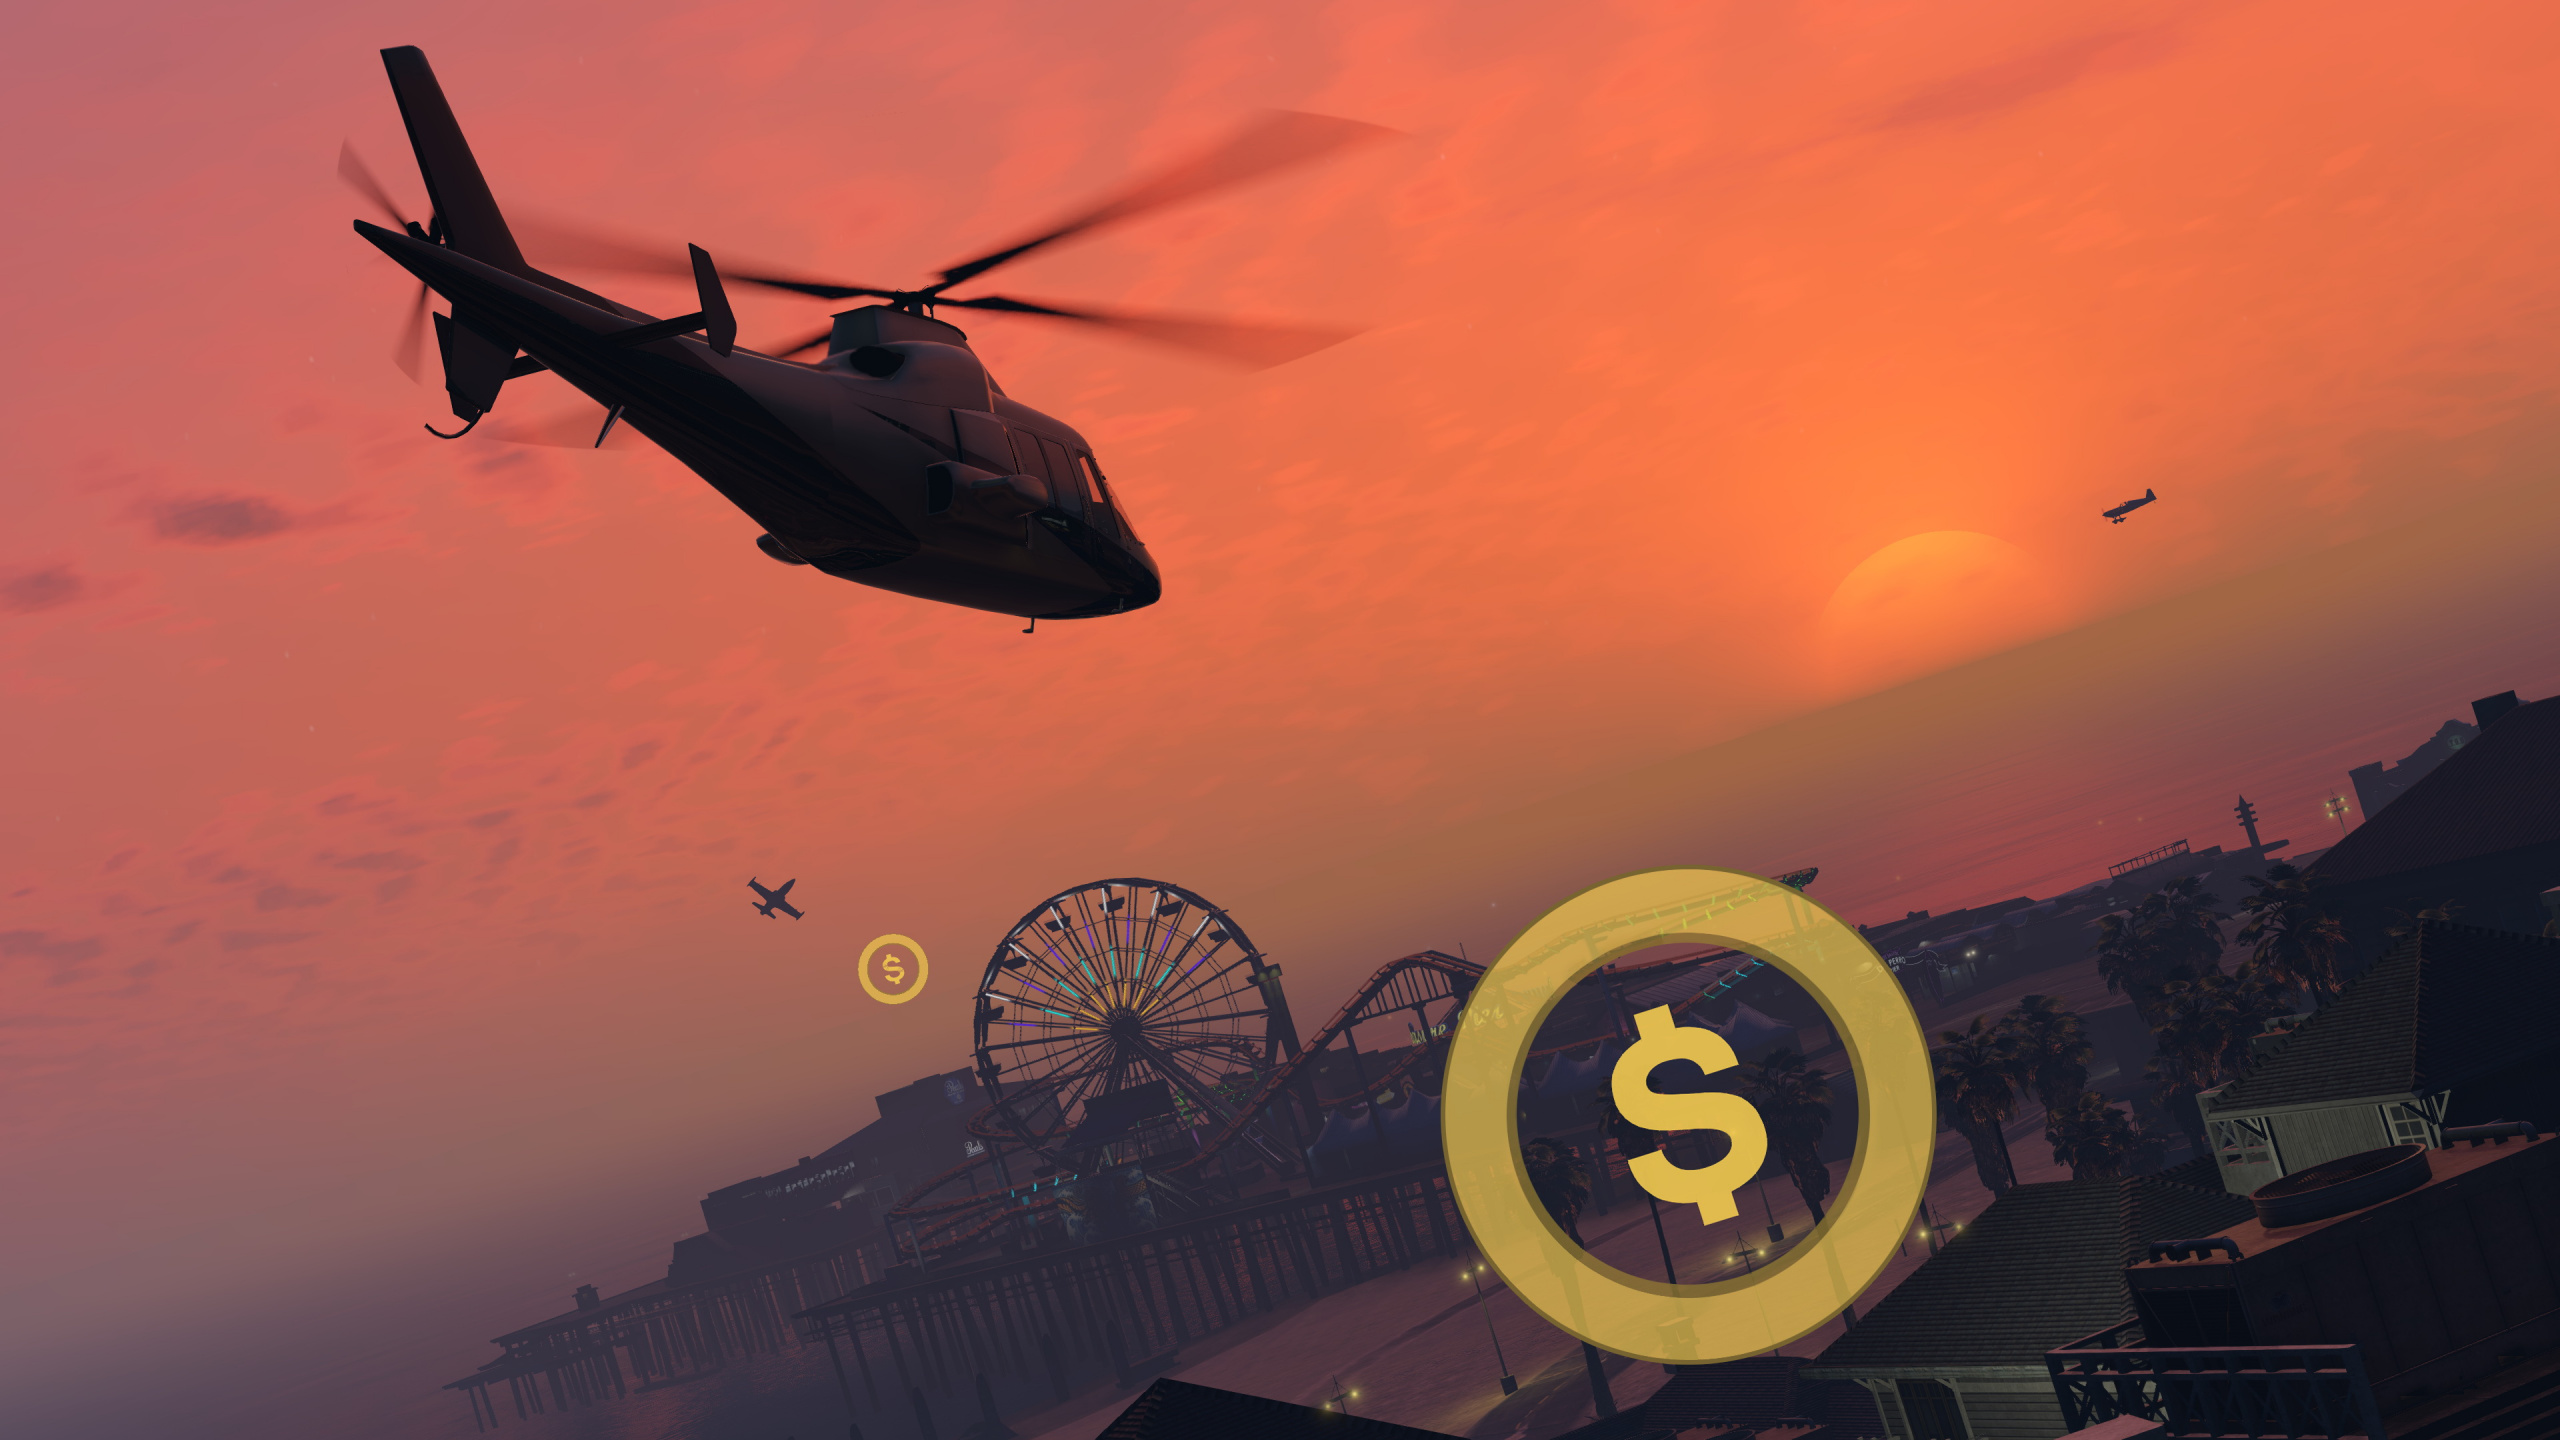 Grand Theft Auto v, Rockstar Games, Open World, Playstation 4, Hubschrauber. Wallpaper in 2560x1440 Resolution